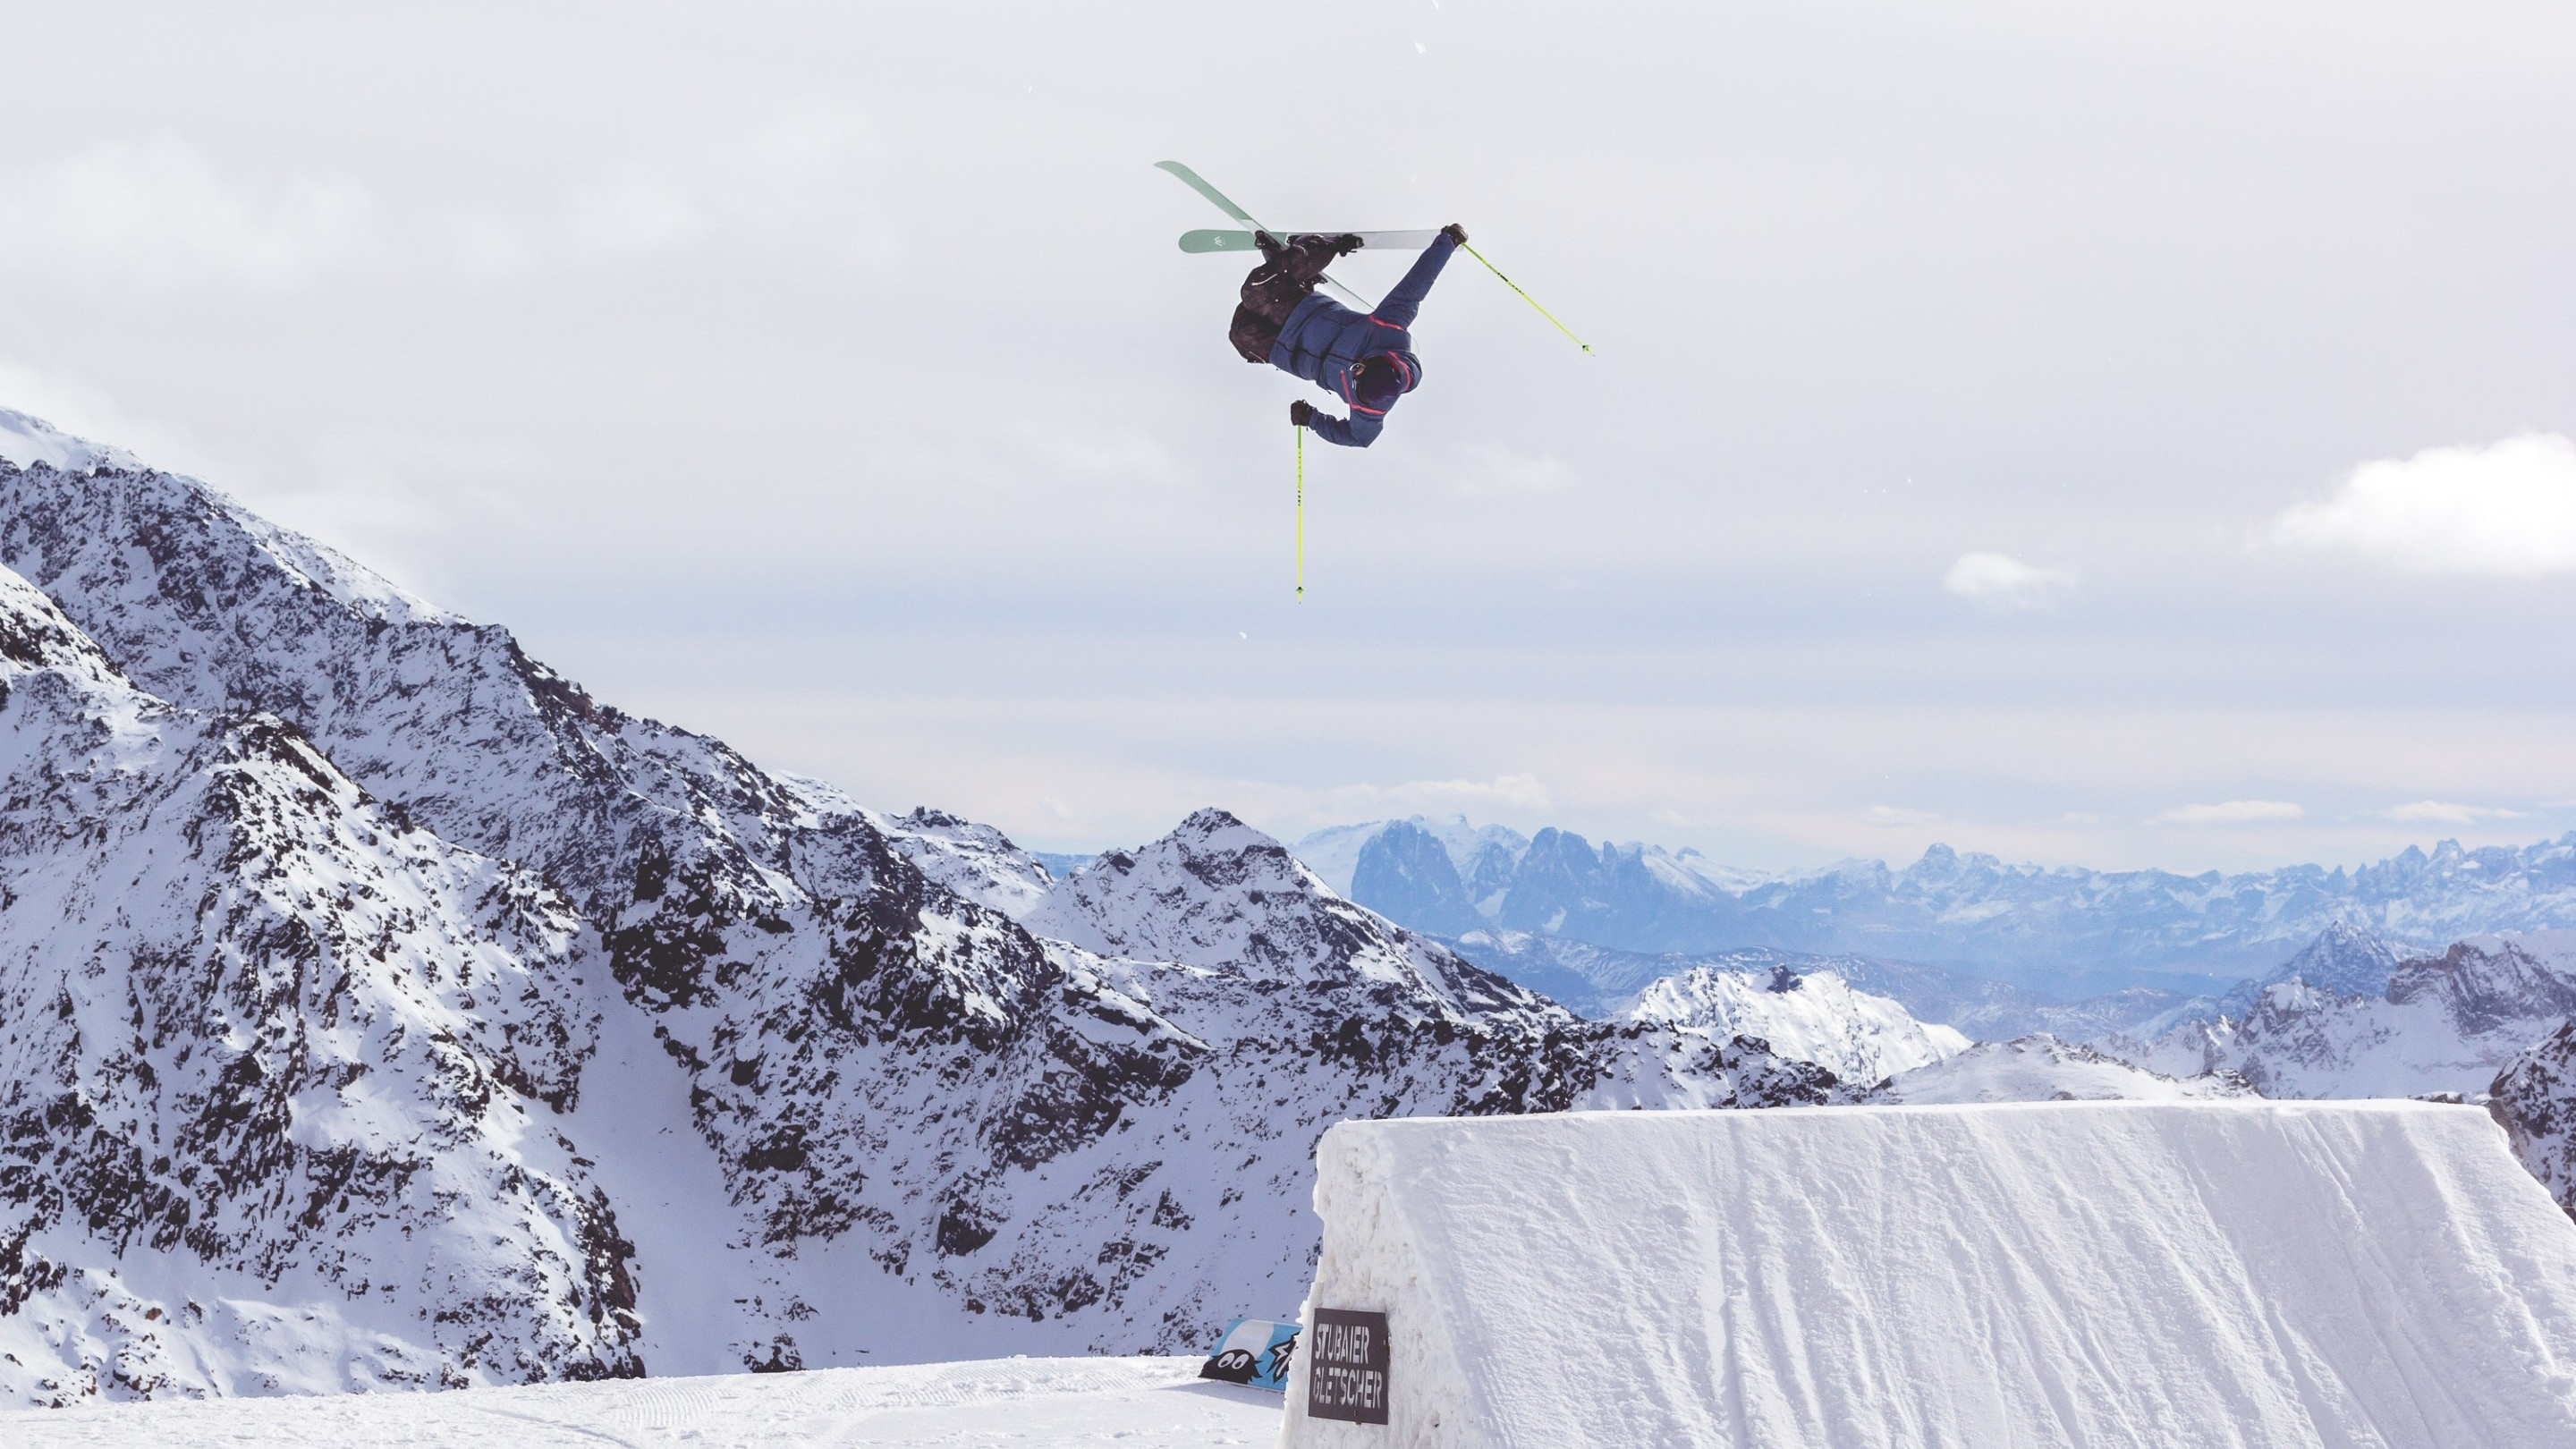 Acrobatic skiing wallpaper 2880x1620